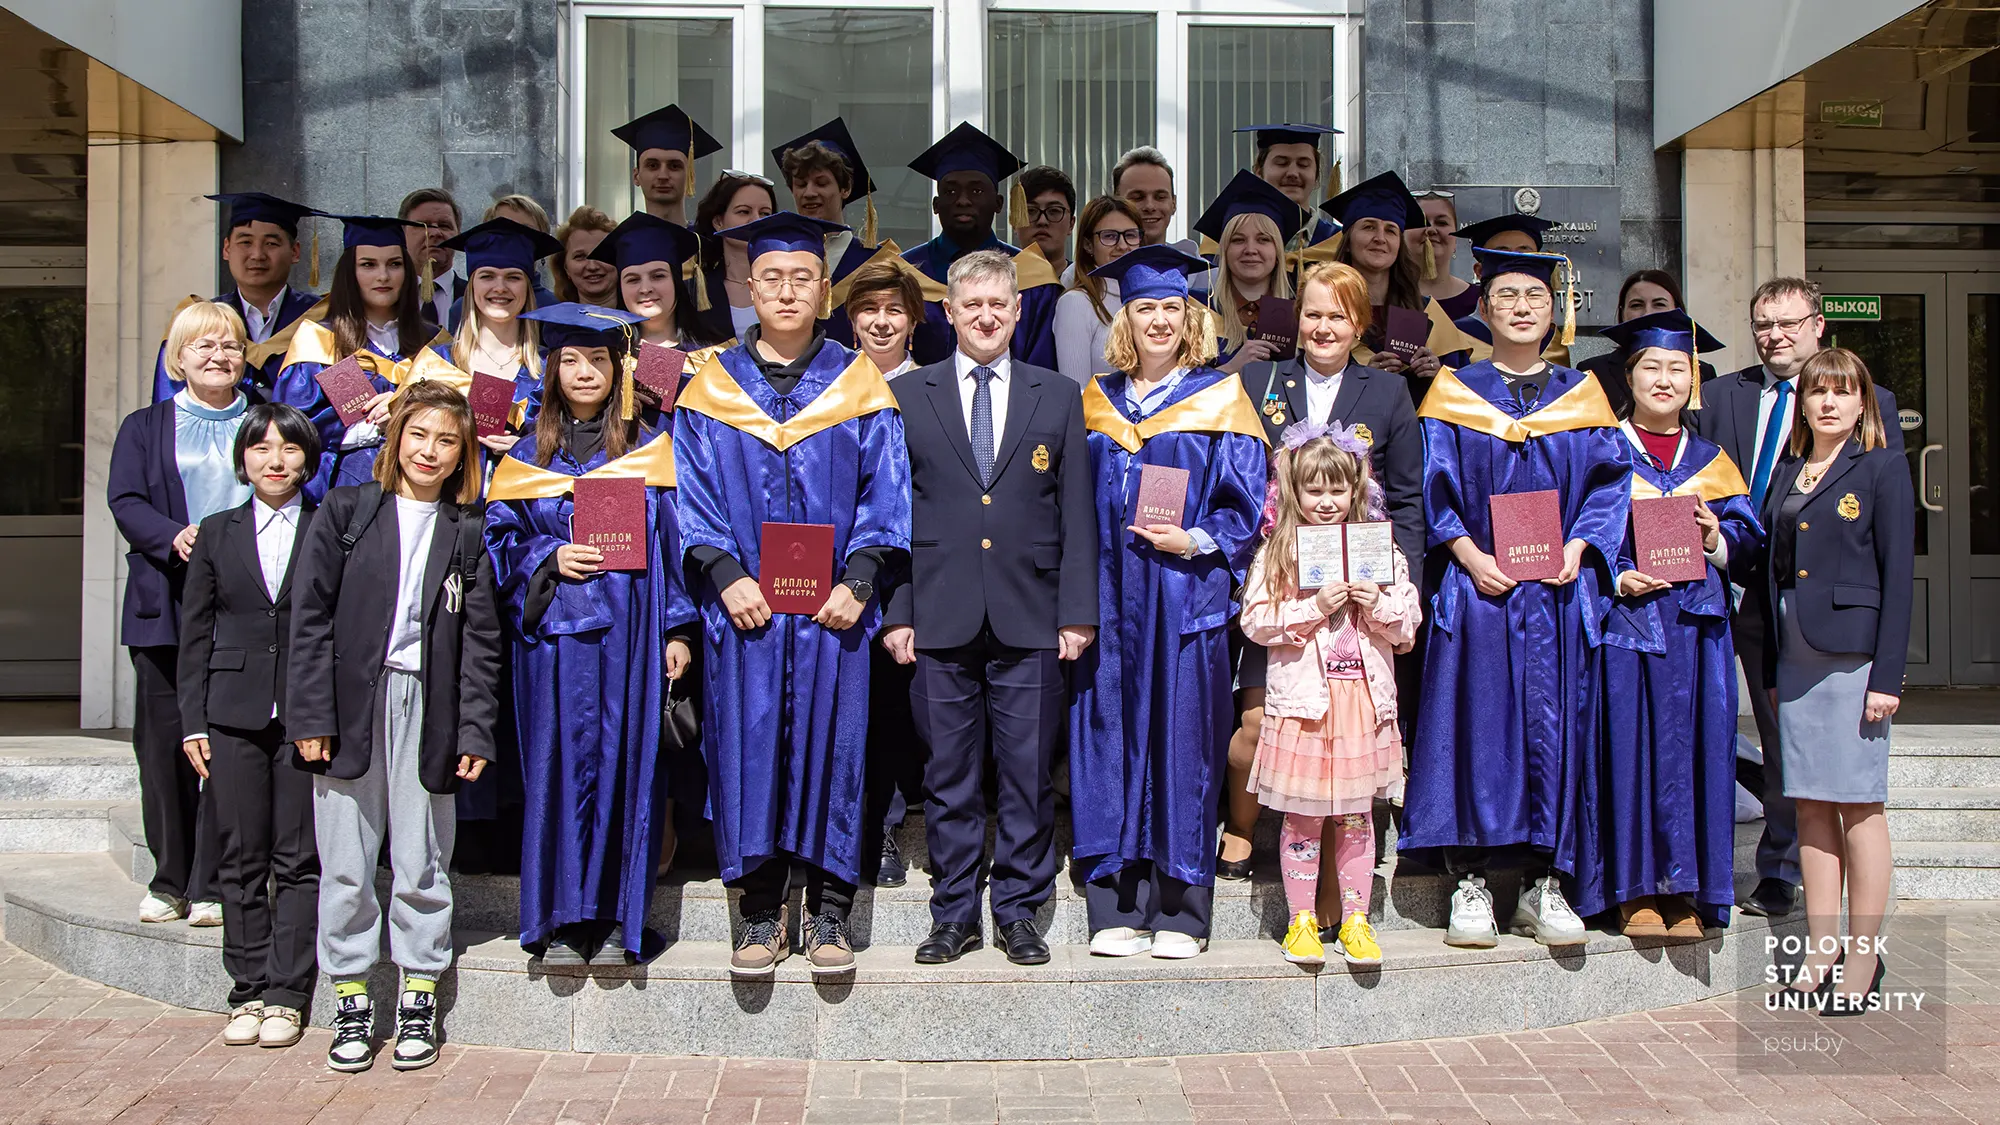 The rector of the university Yuri Romanovsky congratulated the graduates